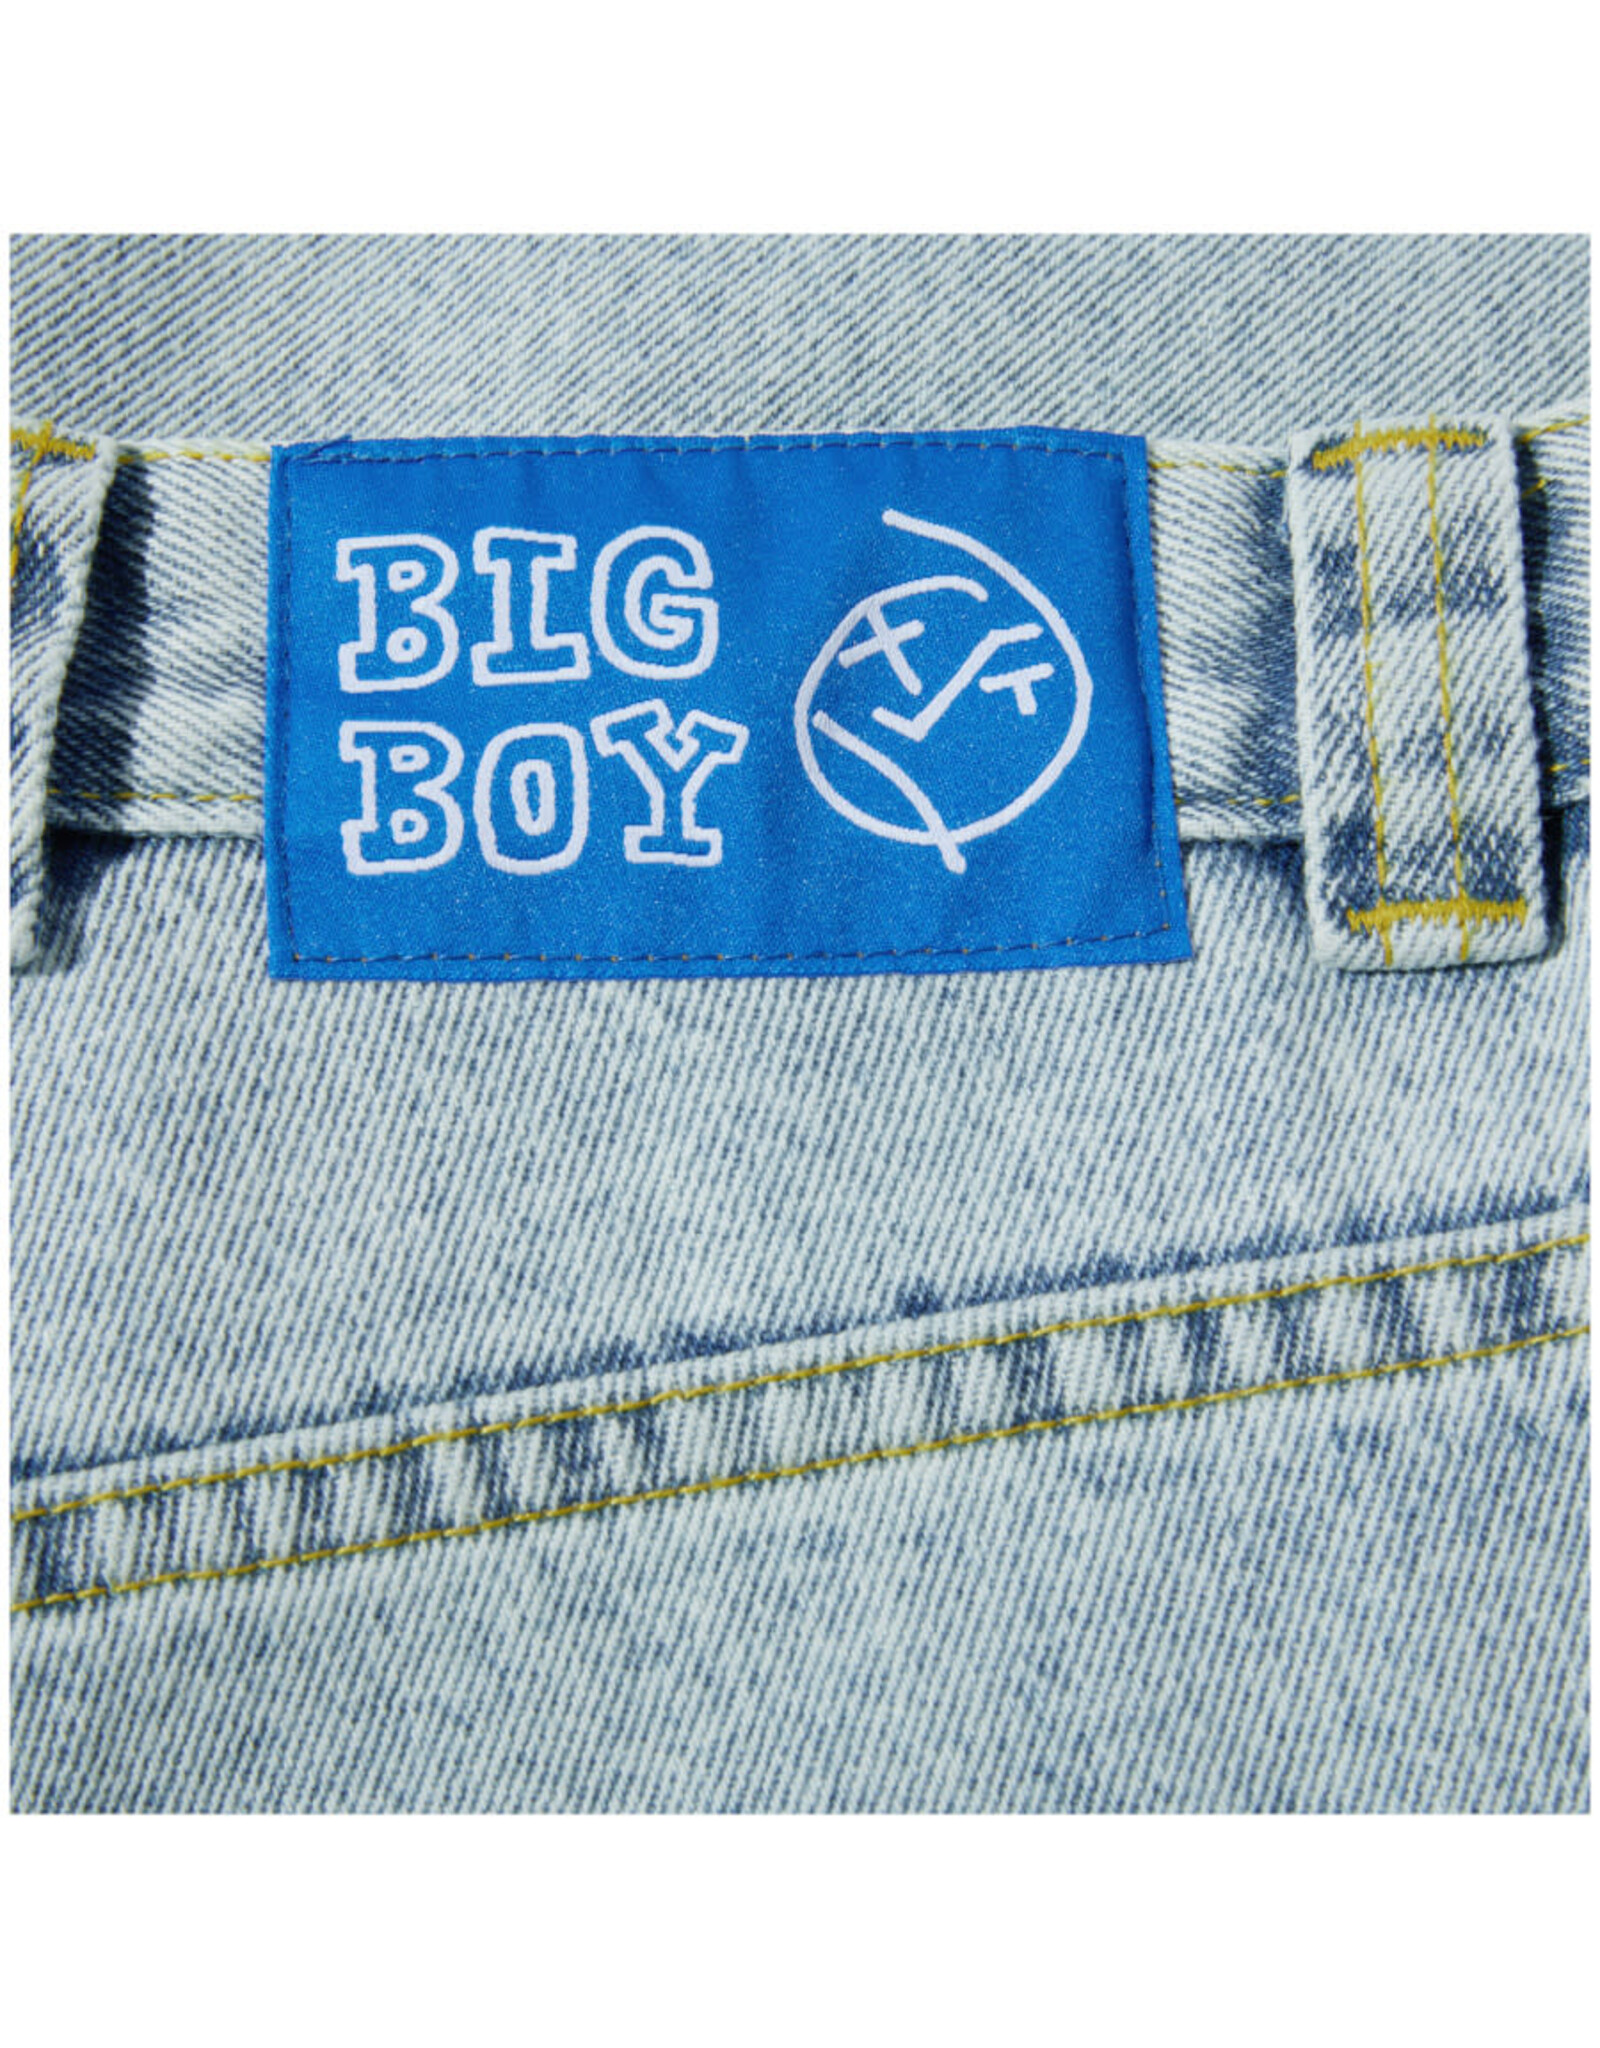 Polar Pants Big Boy Denim FA 23 (Light Blue) - Stix SGV